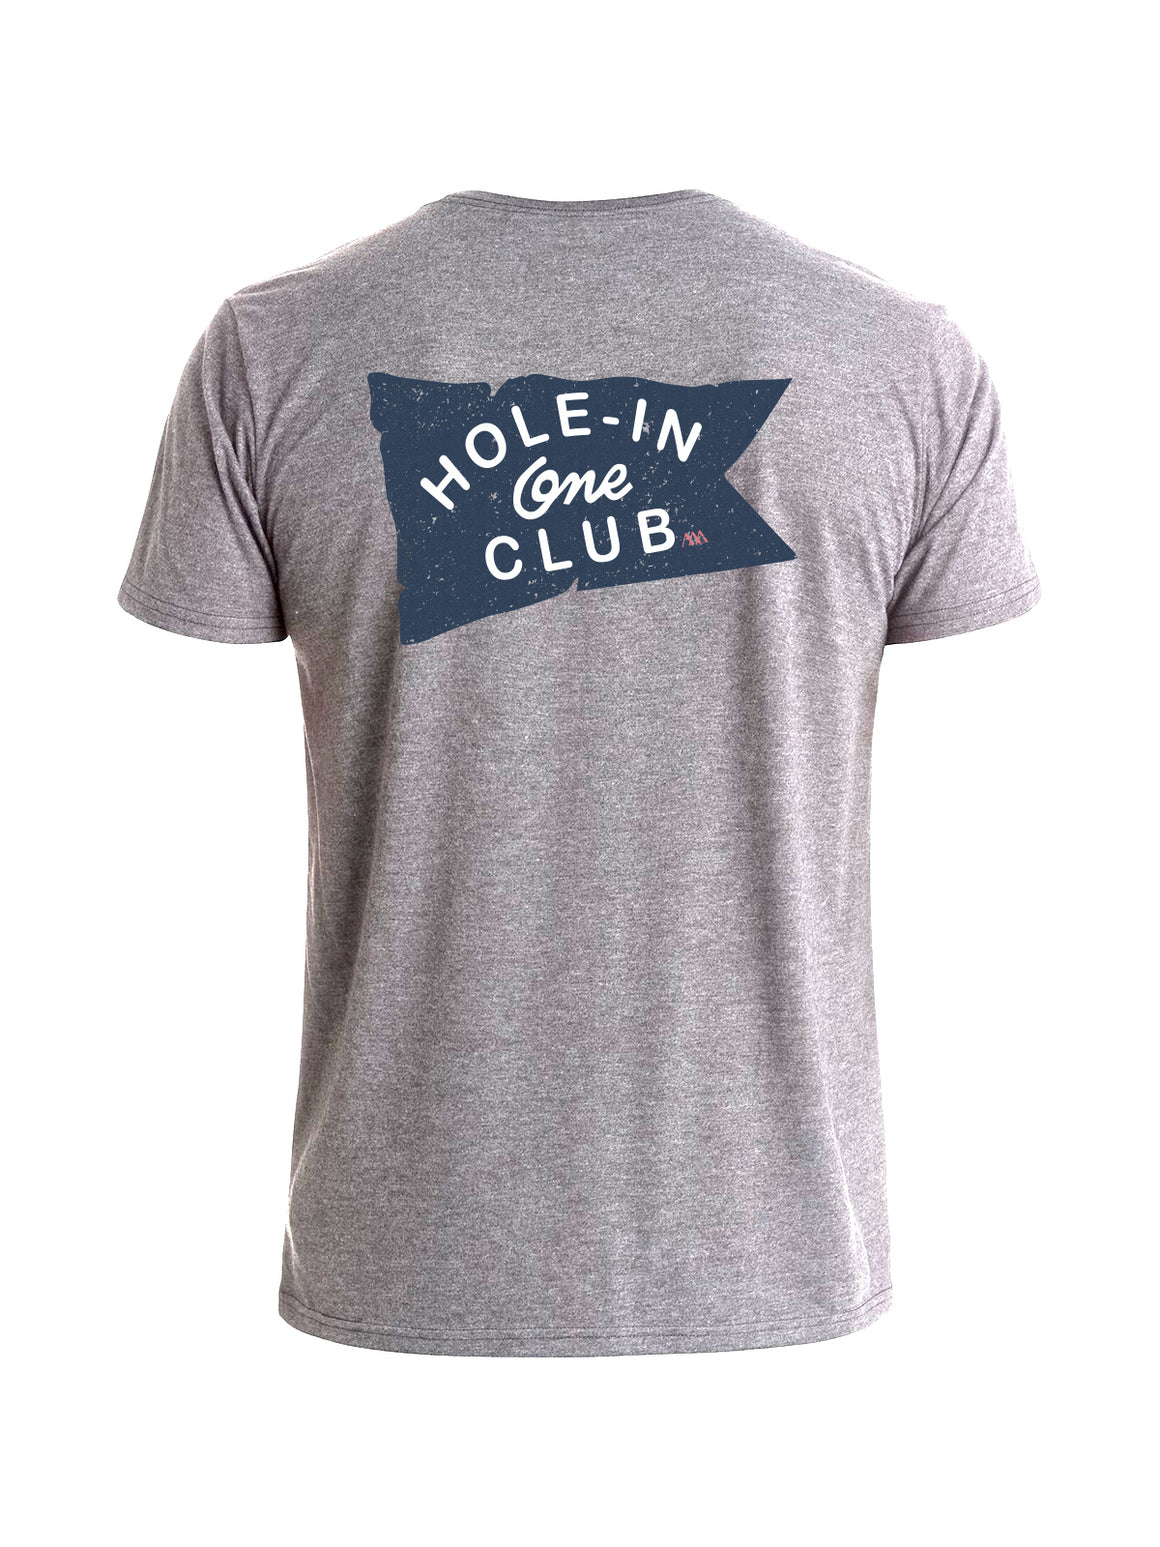 Hole-In-One Club Tee Shirt - Sea Salt Heather